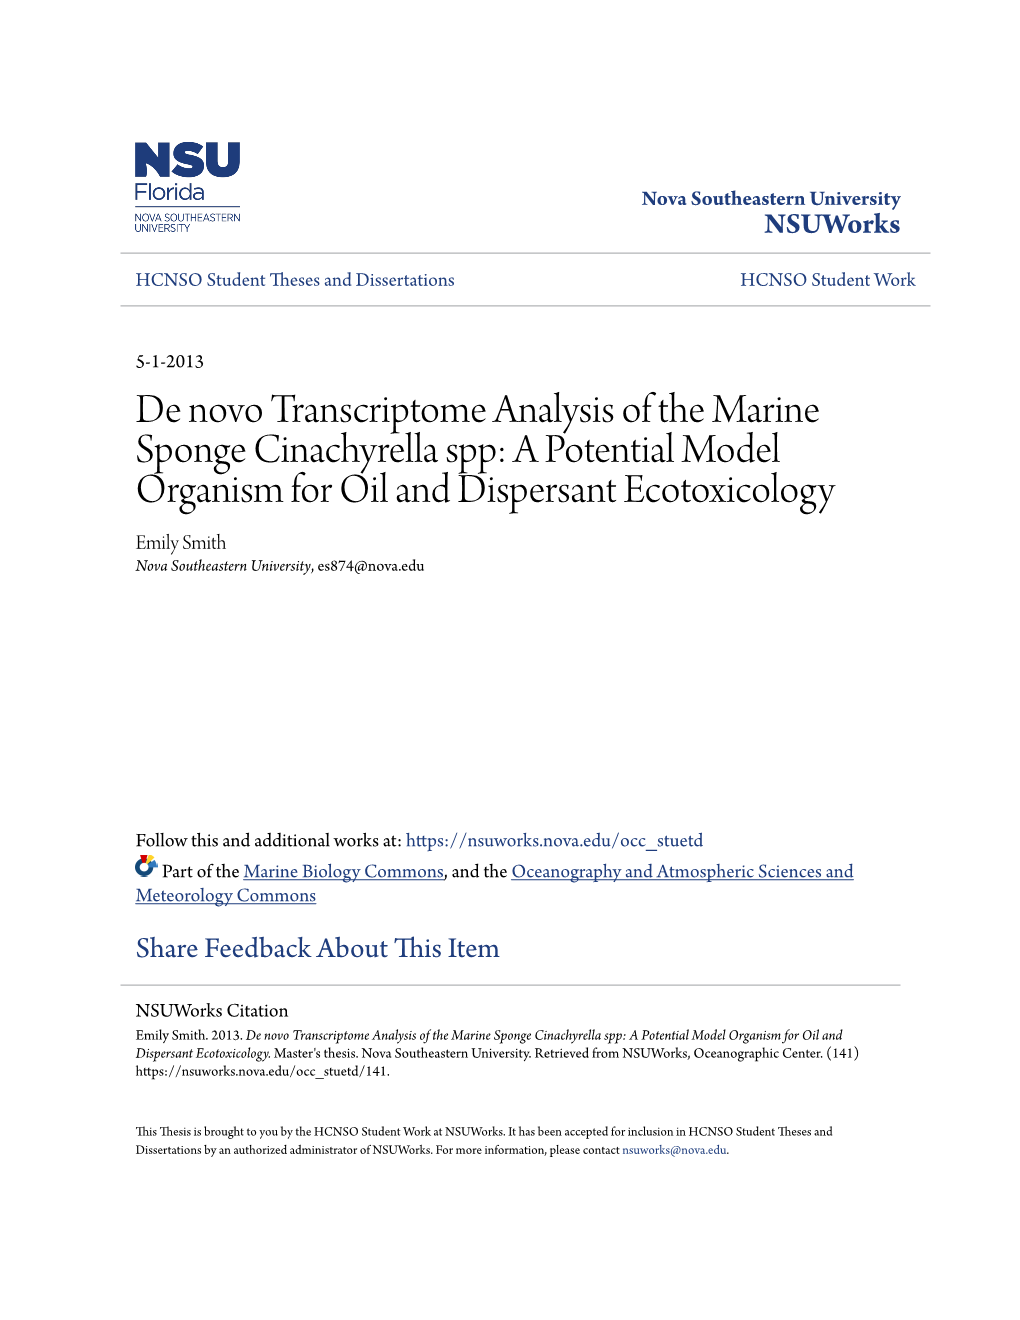 De Novo Transcriptome Analysis of the Marine Sponge